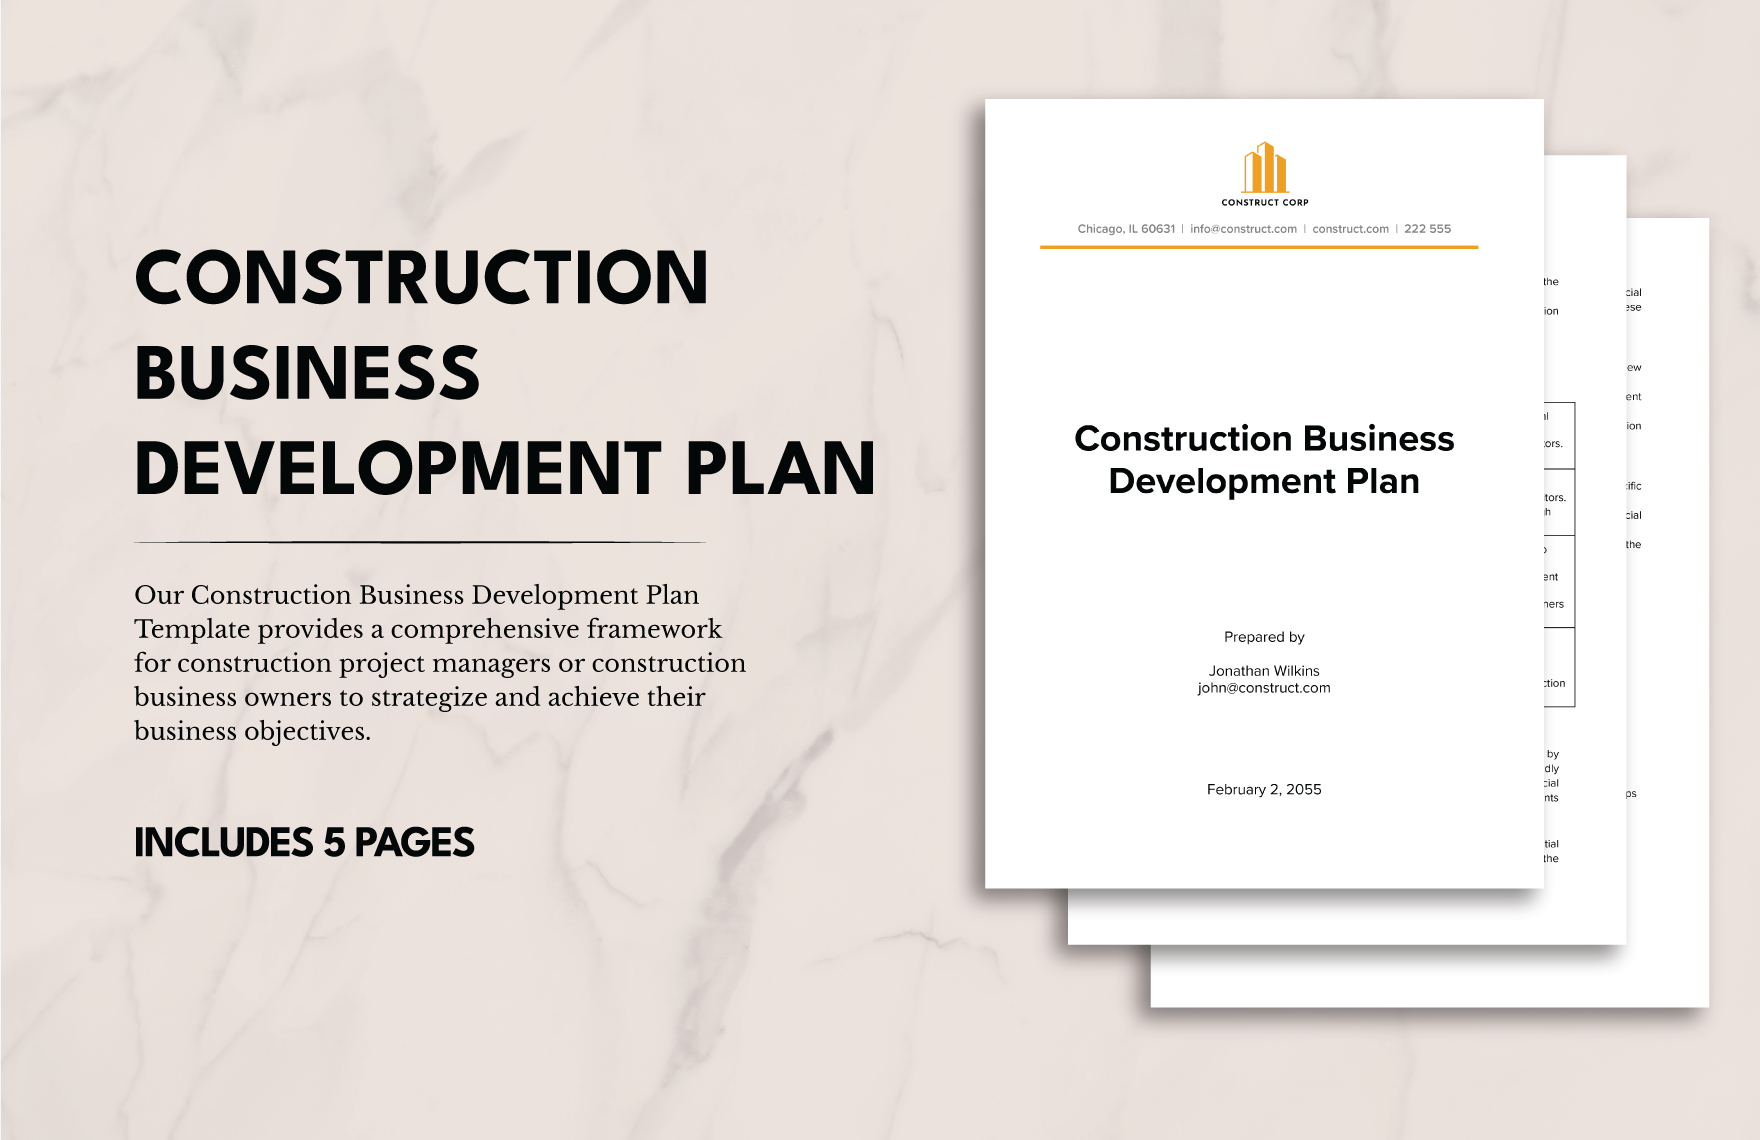 Construction Business Development Plan Template in Word, Google Docs